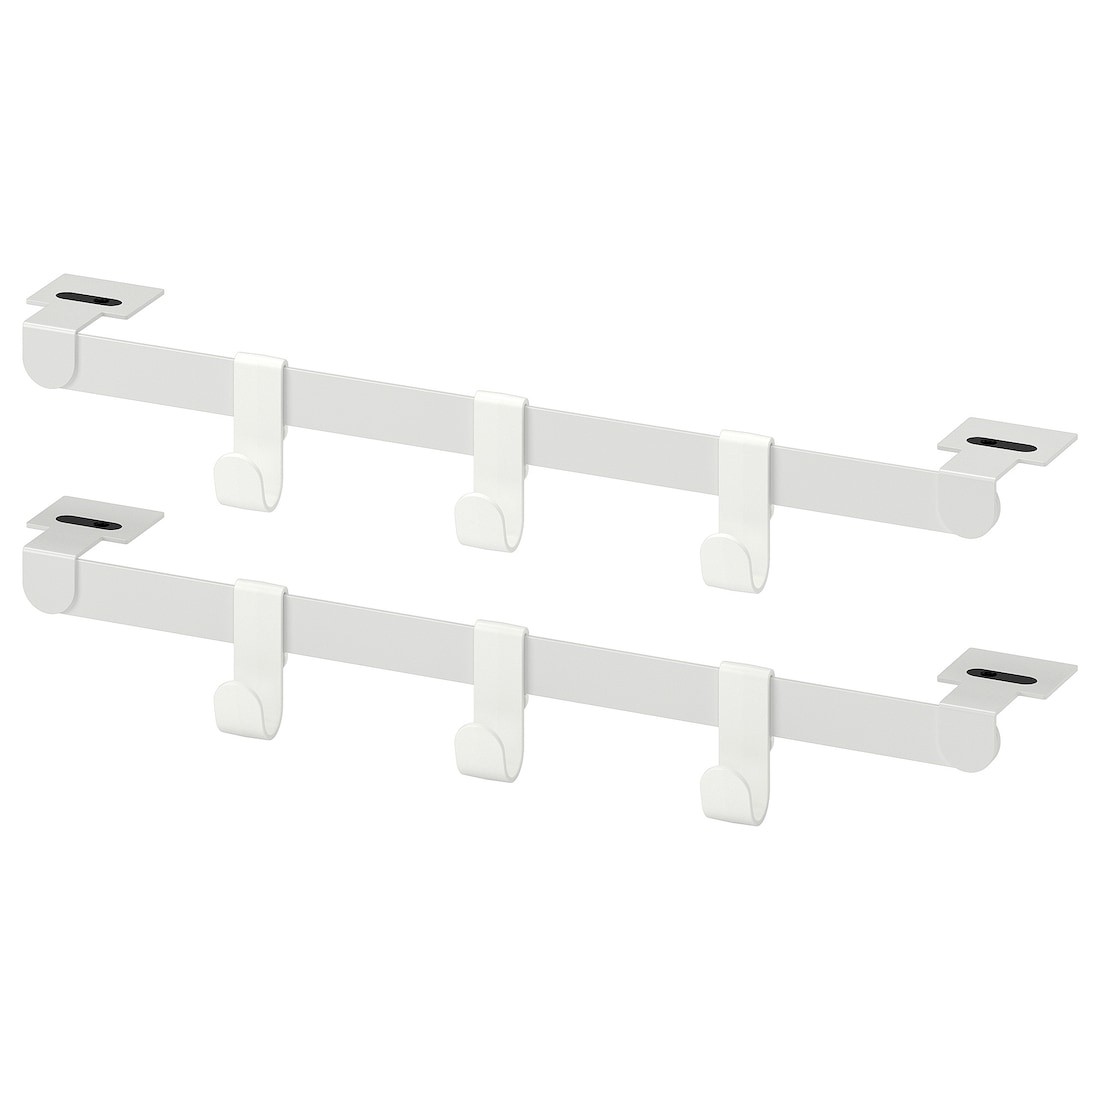 IKEA HJÄLPA ХЭЛПА 2 крючка + 6 крючков + 2 комплекта фурнитуры, белый, 40 см 19428304 | 194.283.04